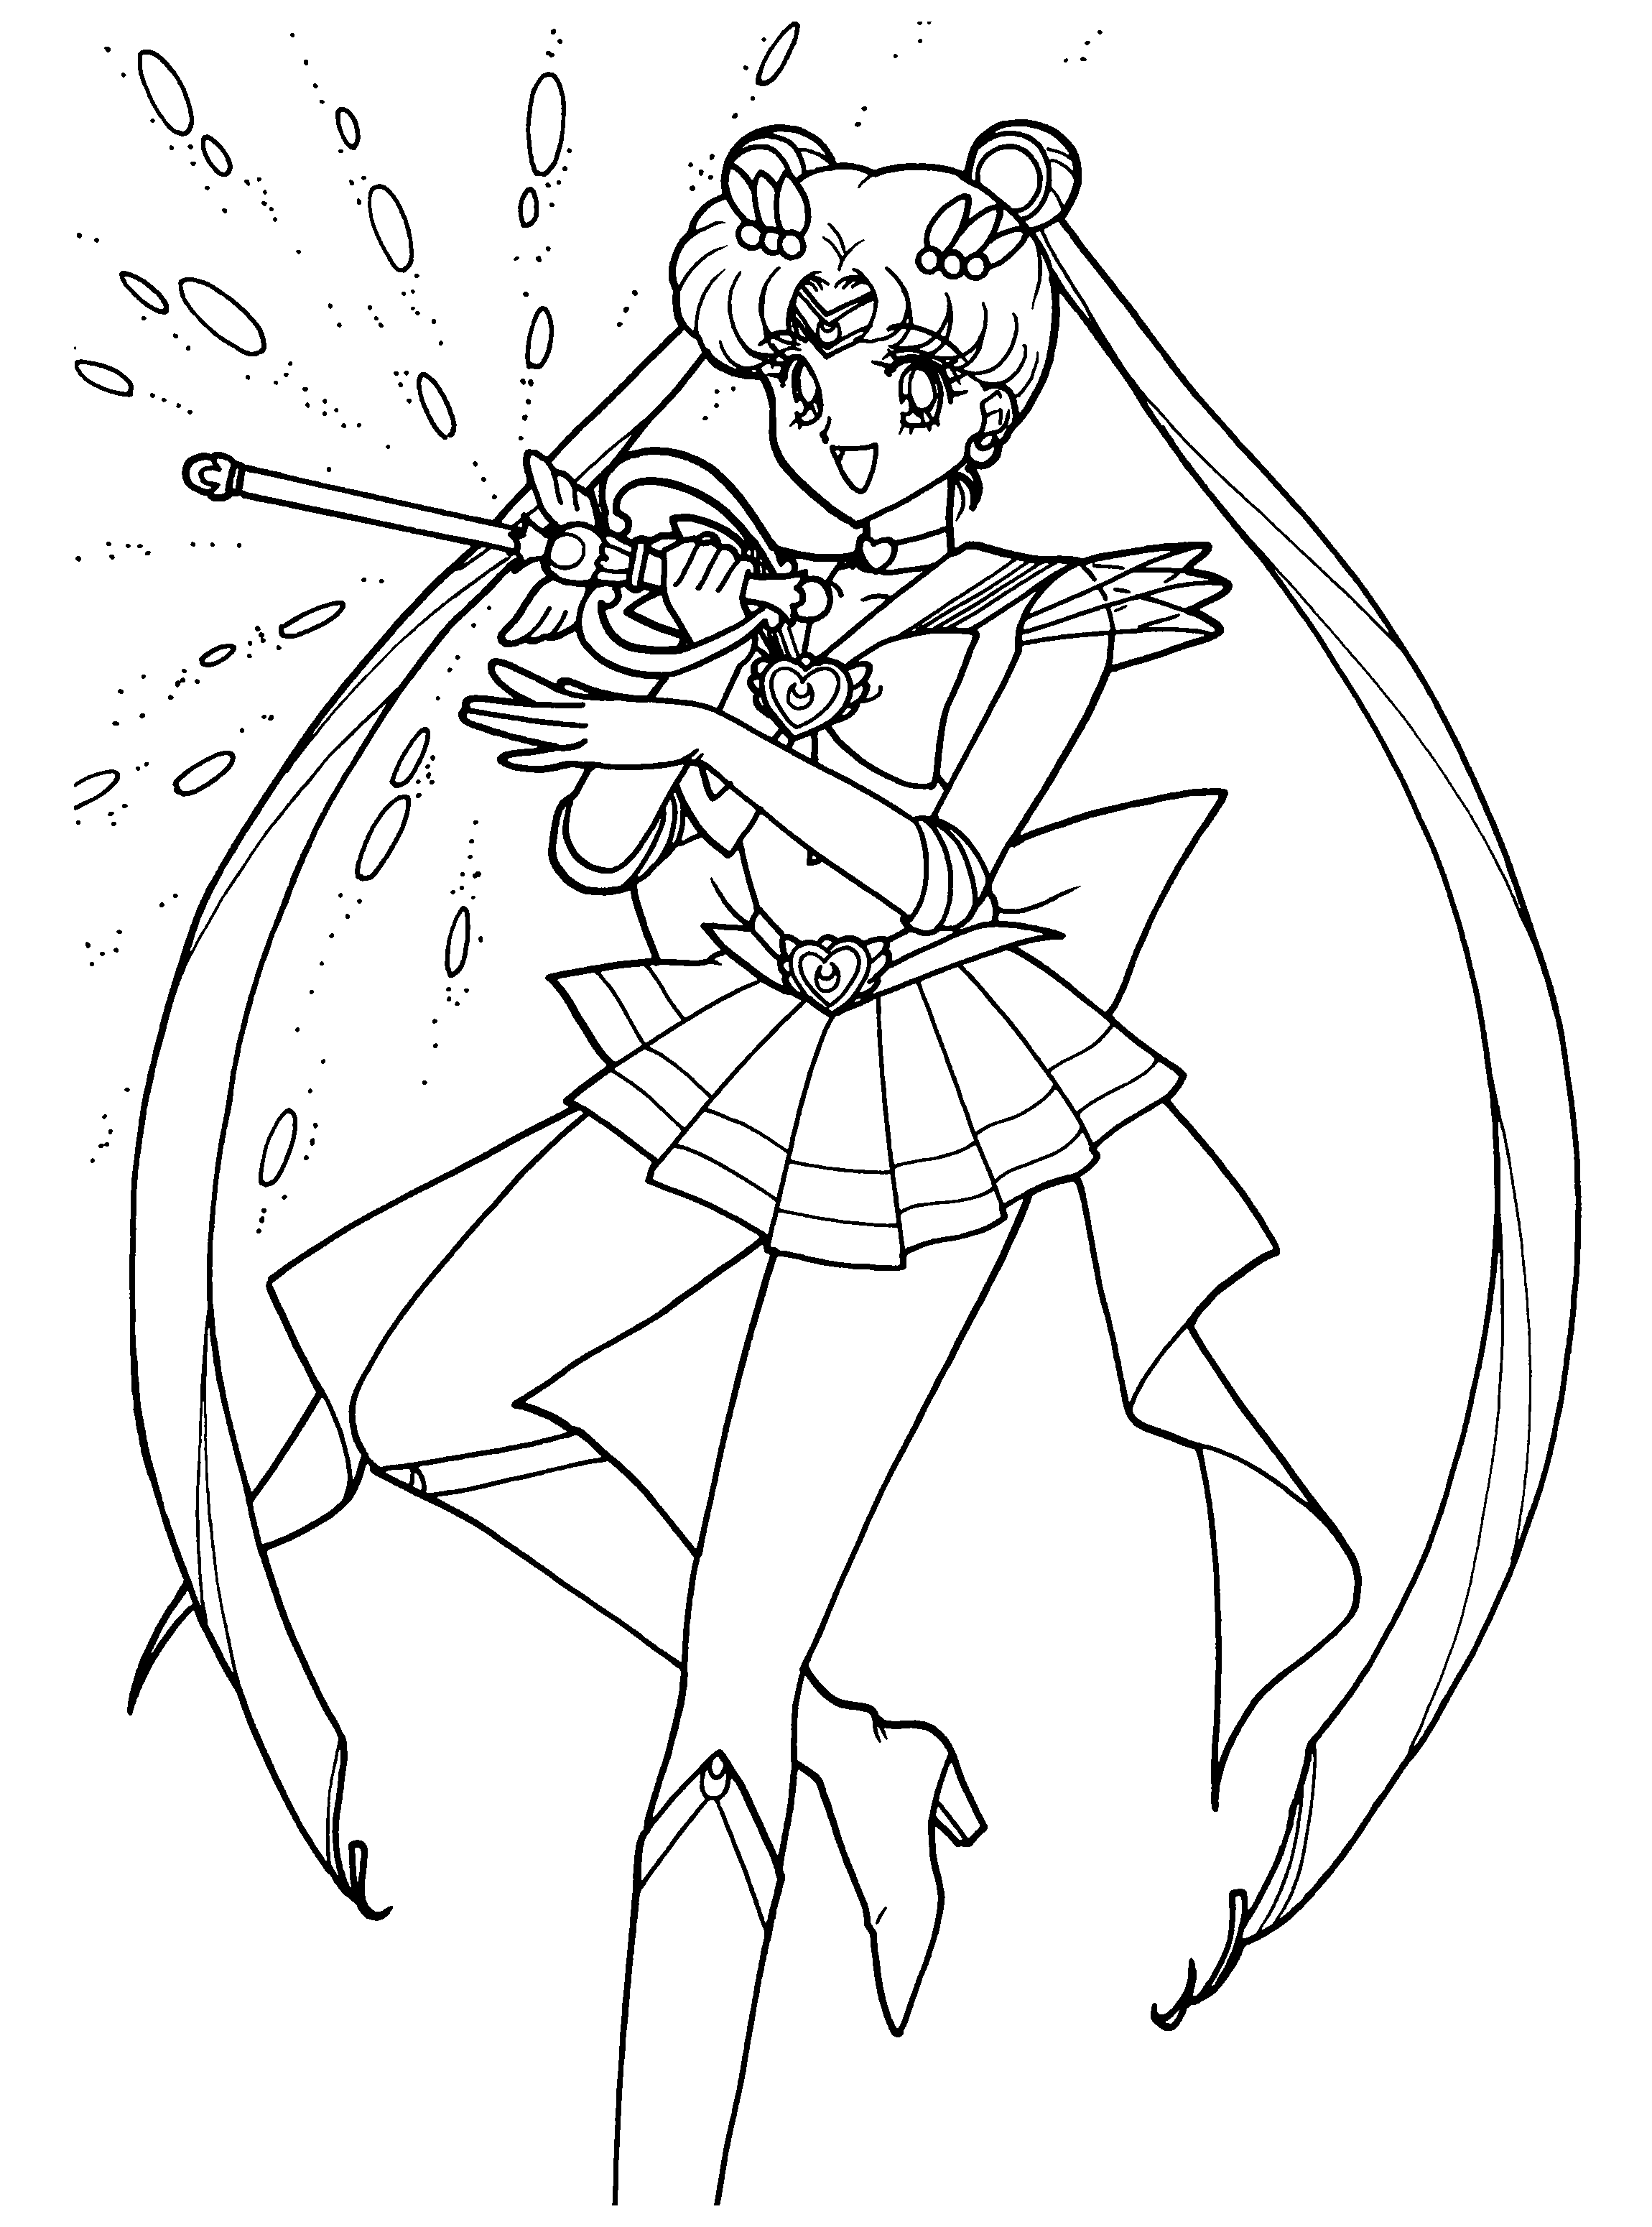 Sailor Moon Sailor Star coloring page